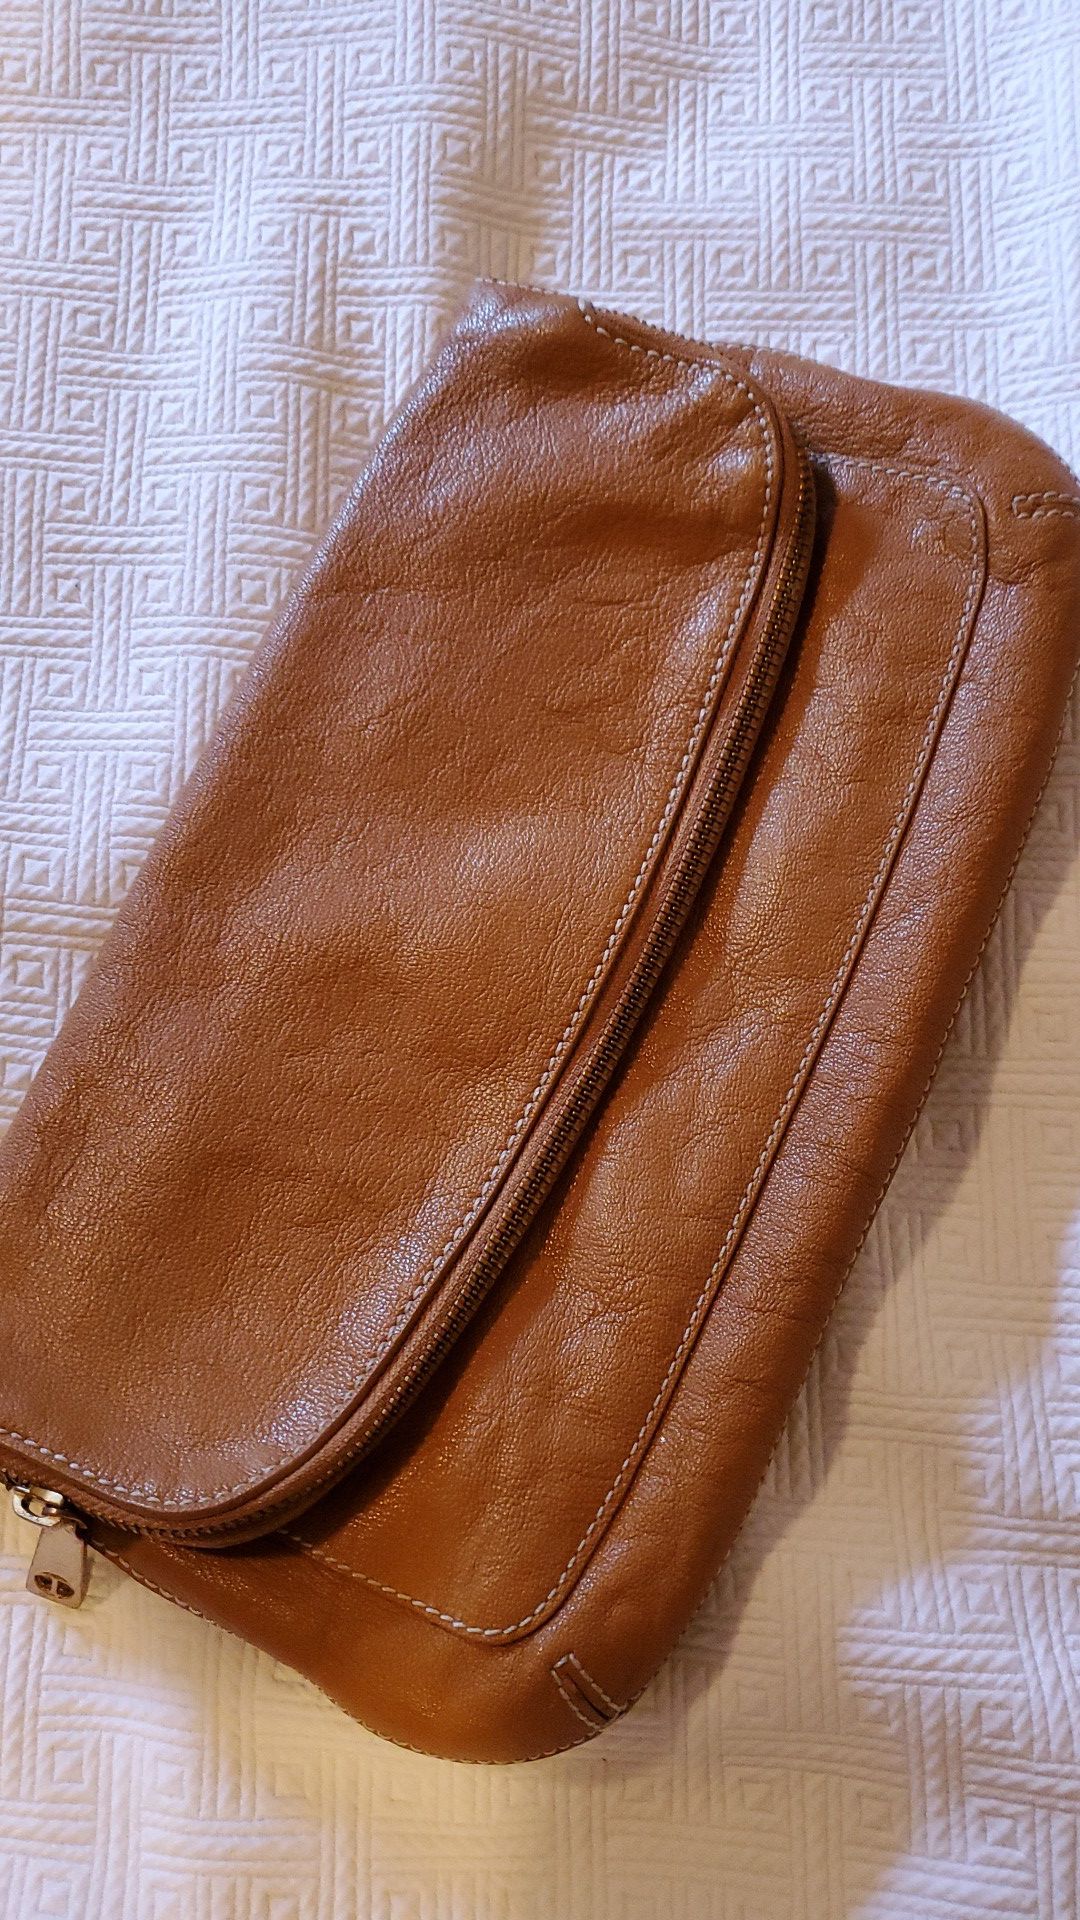 Beautiful Tan Leather TALBOTS Clutch/Lg.Wristlet (missing strap)